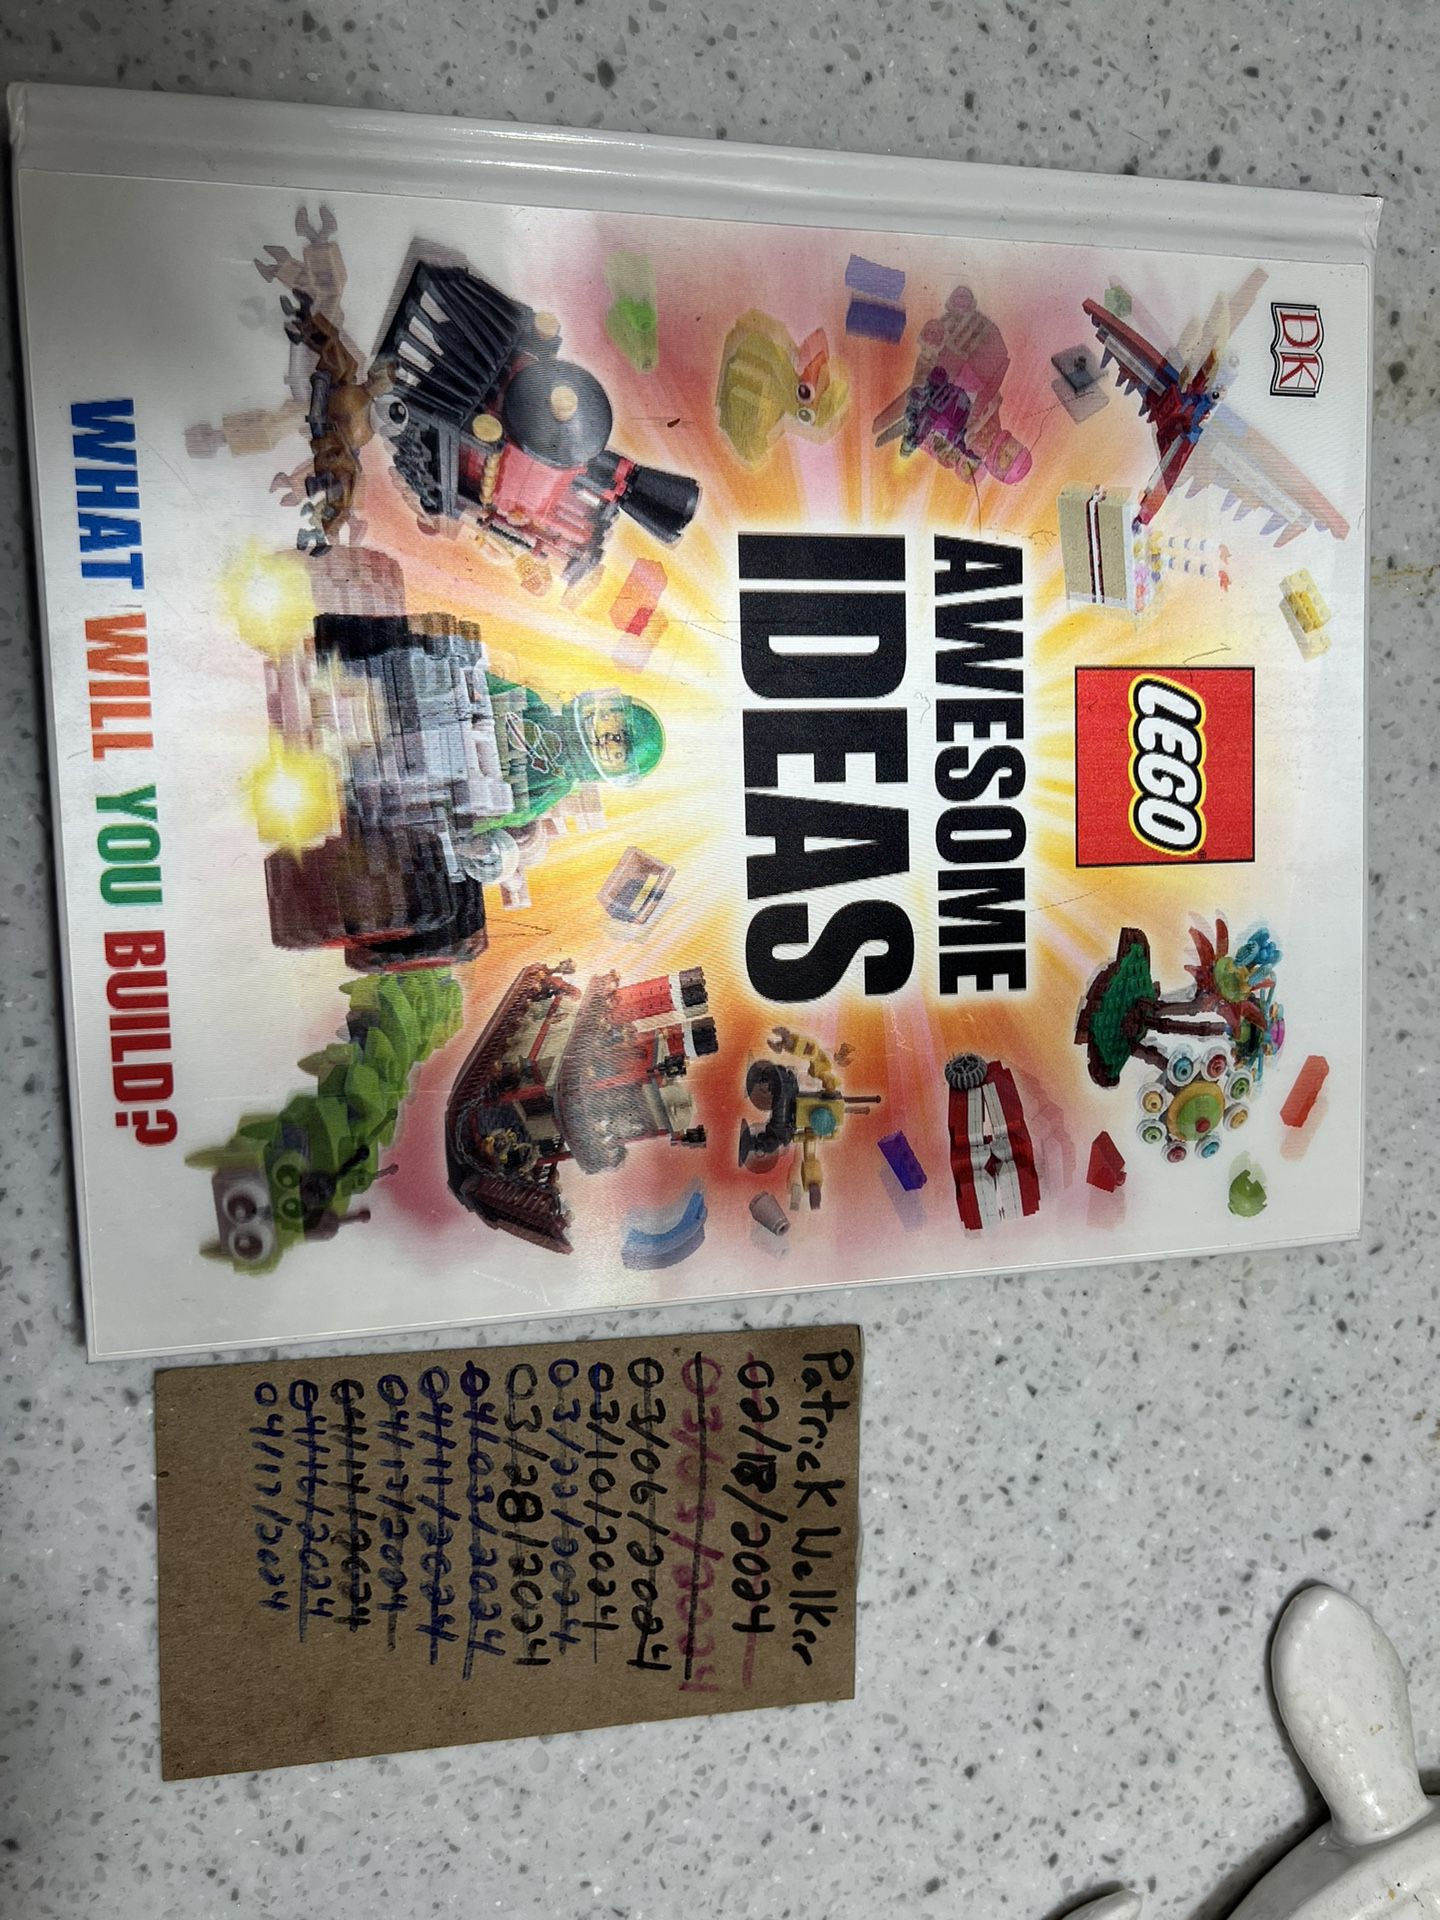 Lego Awesome Ideas Hard cover Book